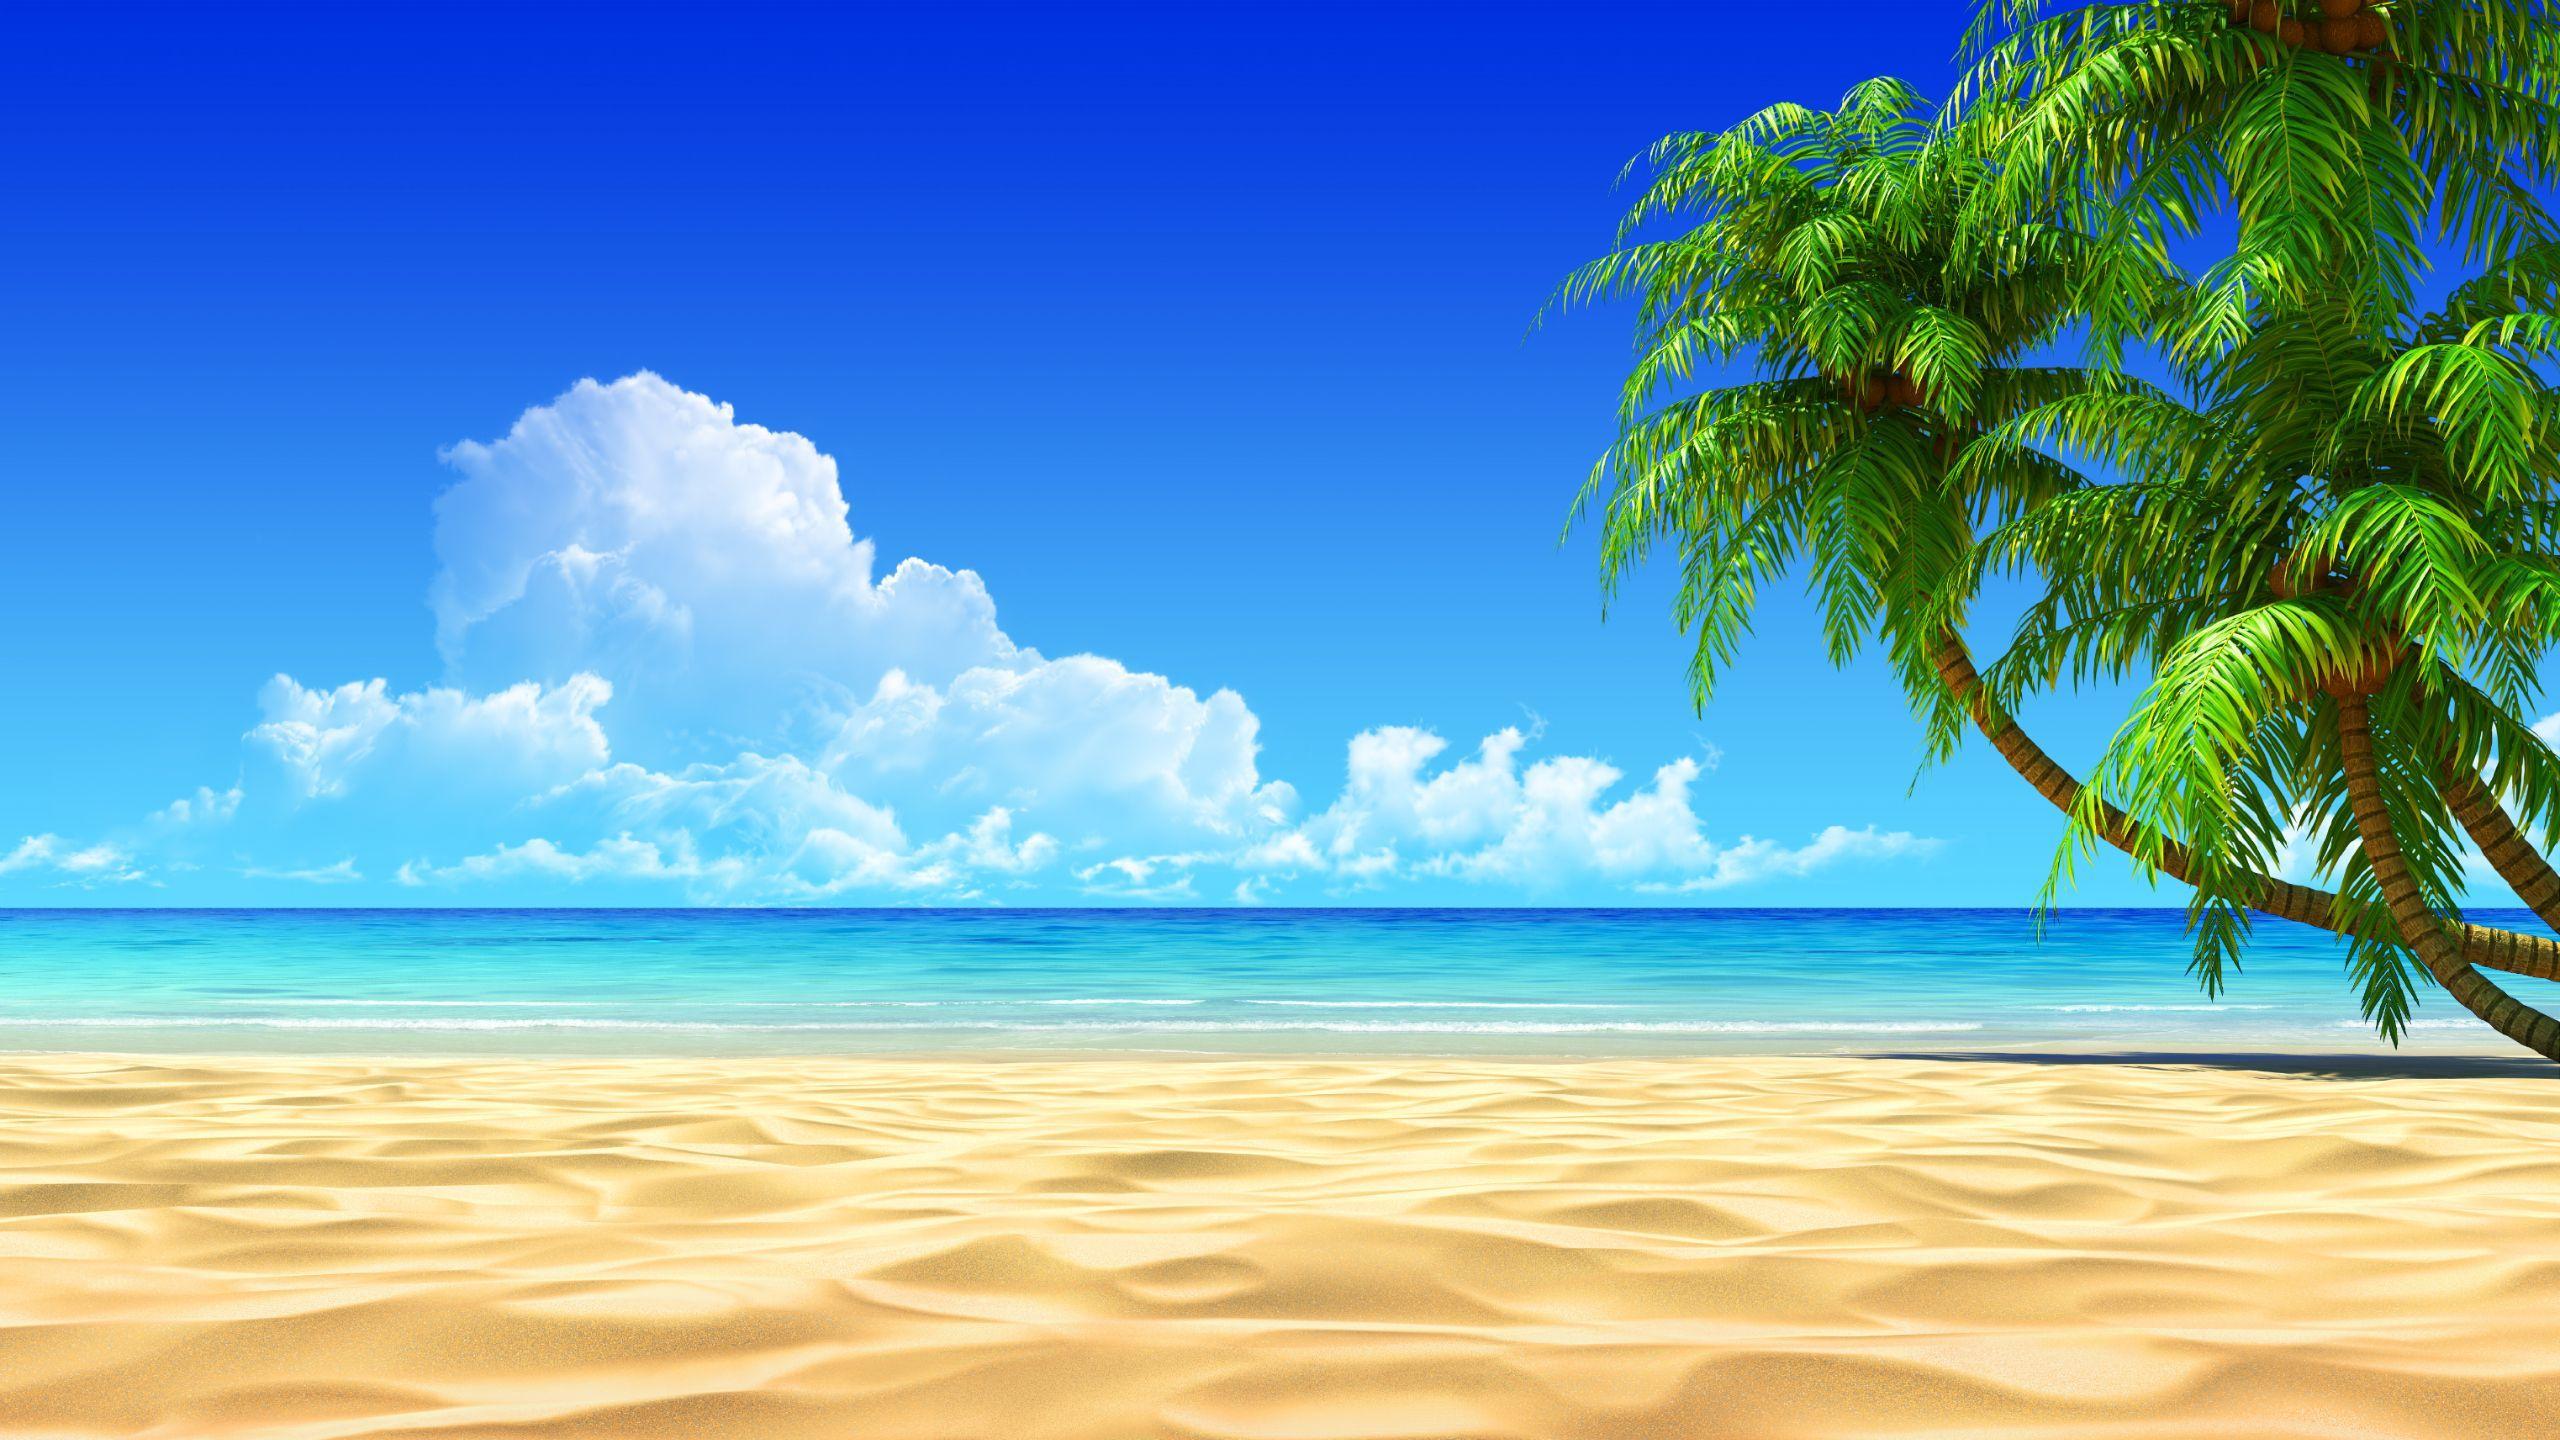 Aruba Beachfront Scene Desktop Wallpaper at